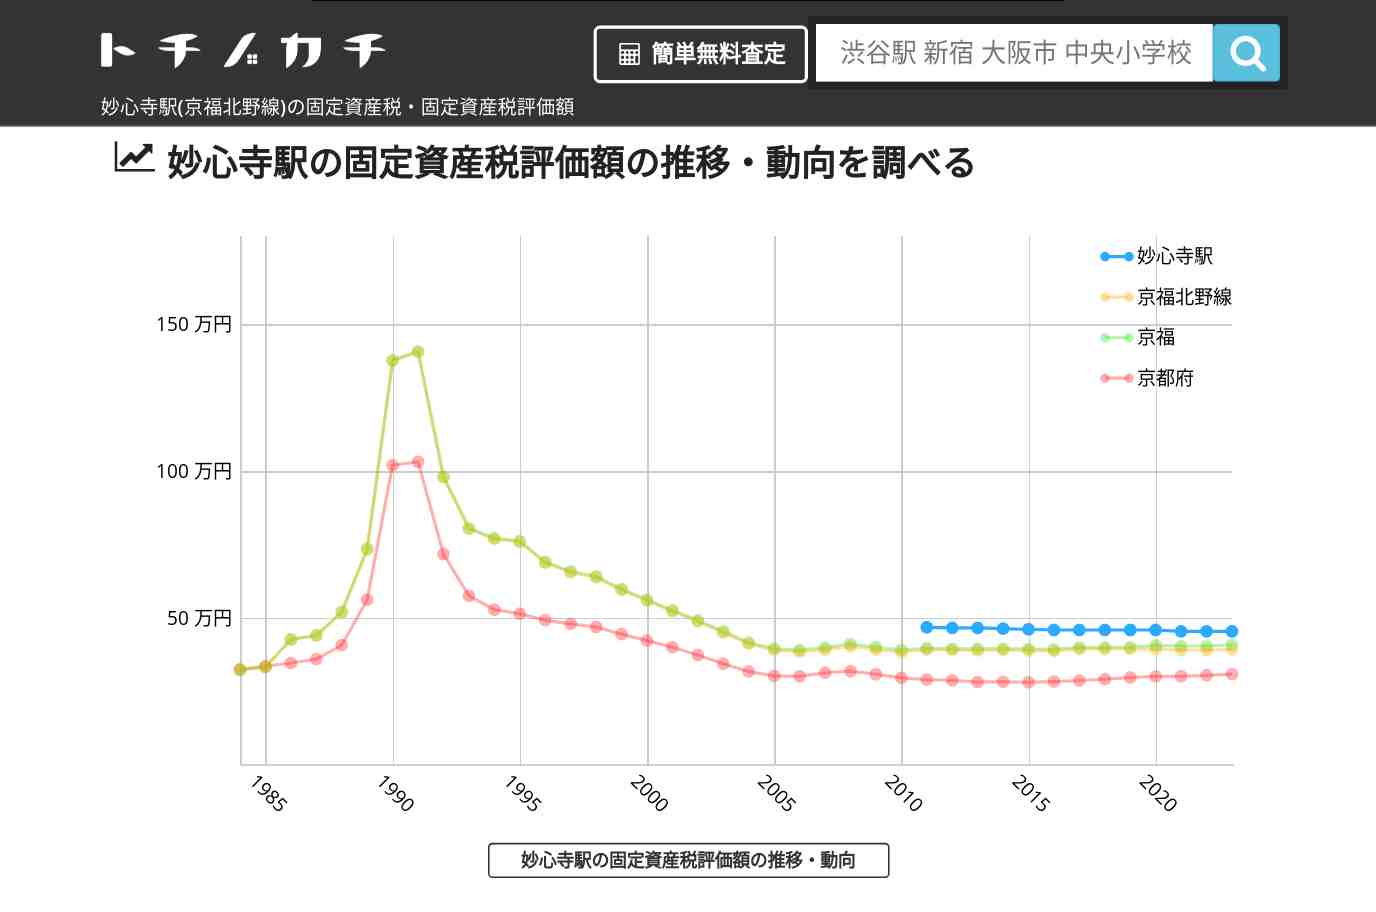 妙心寺駅(京福北野線)の固定資産税・固定資産税評価額 | トチノカチ